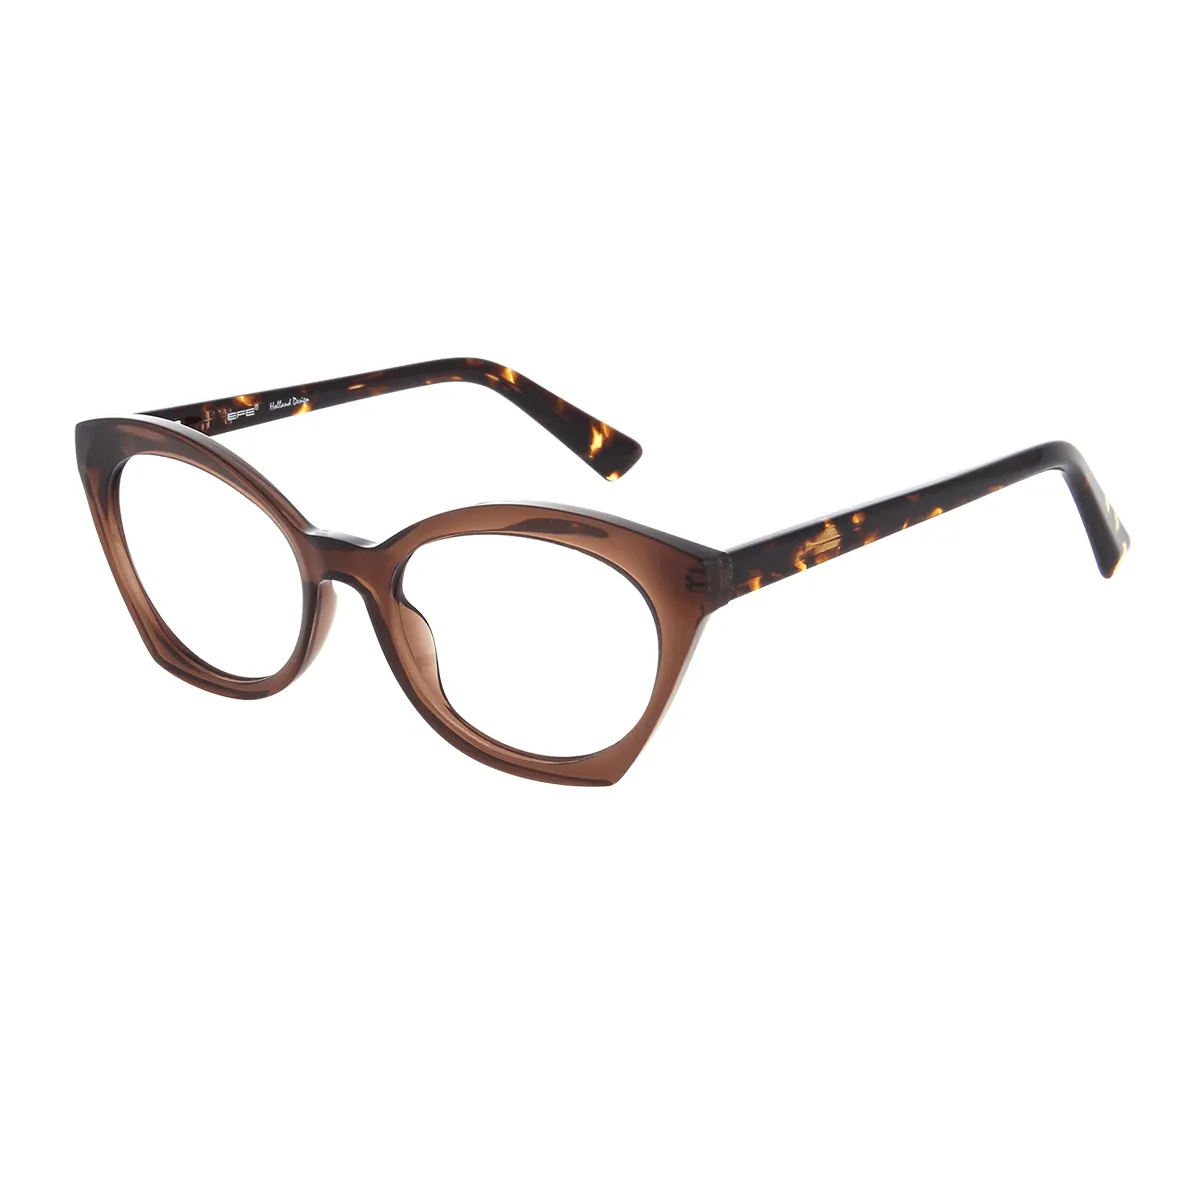 Newby - Cat-eye Brown Glasses for Women